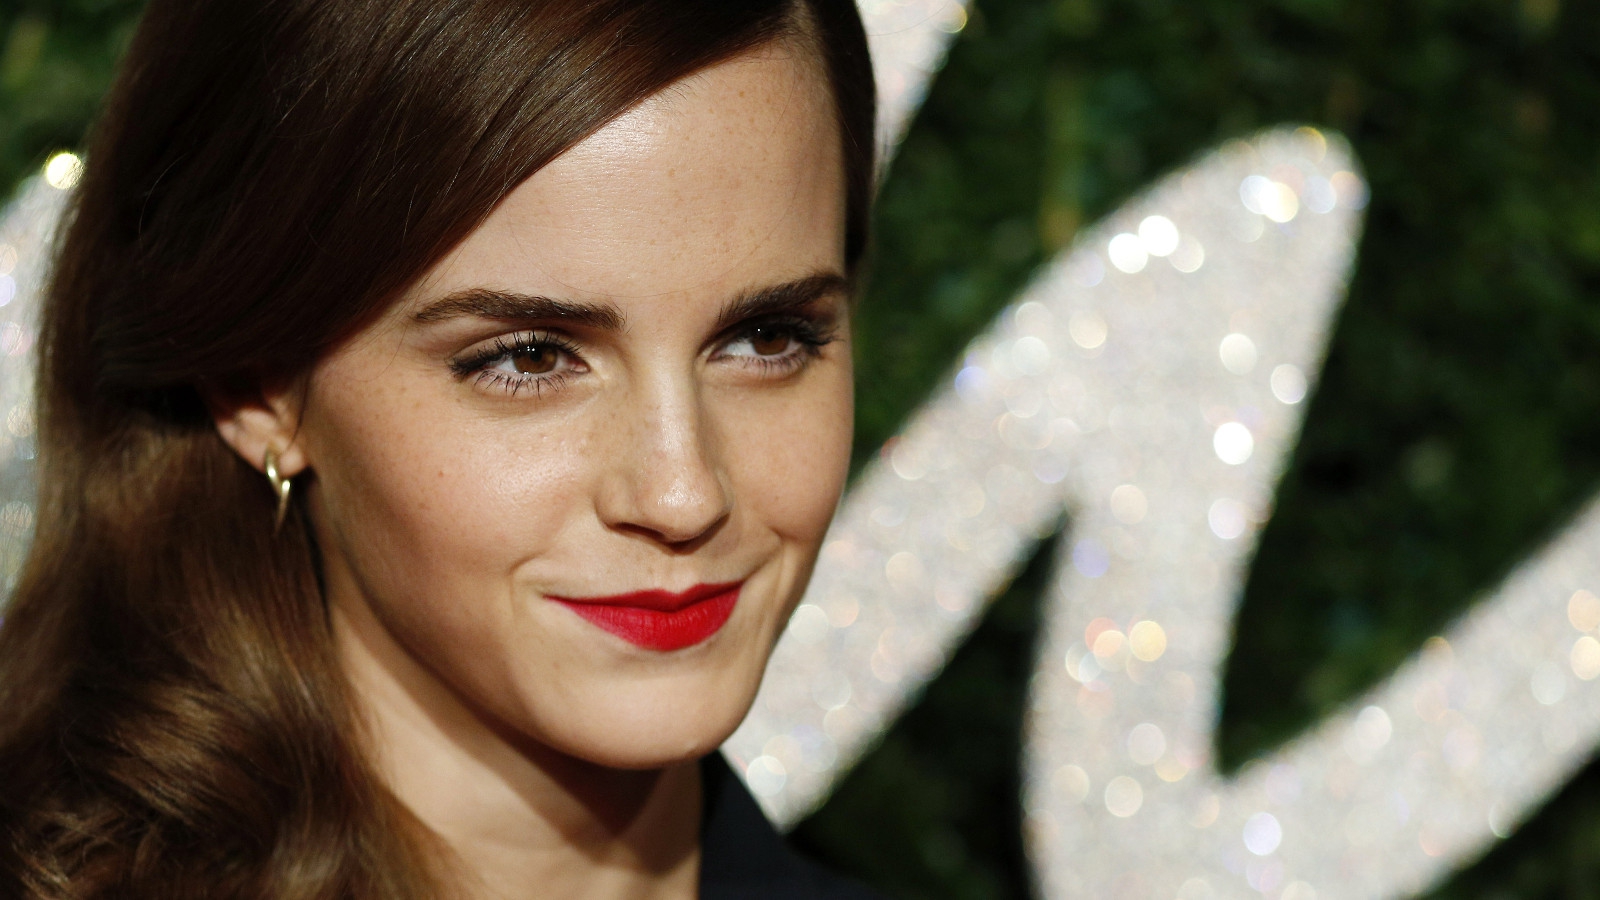 Harry Potter reunion: Emma Watson's style evolution